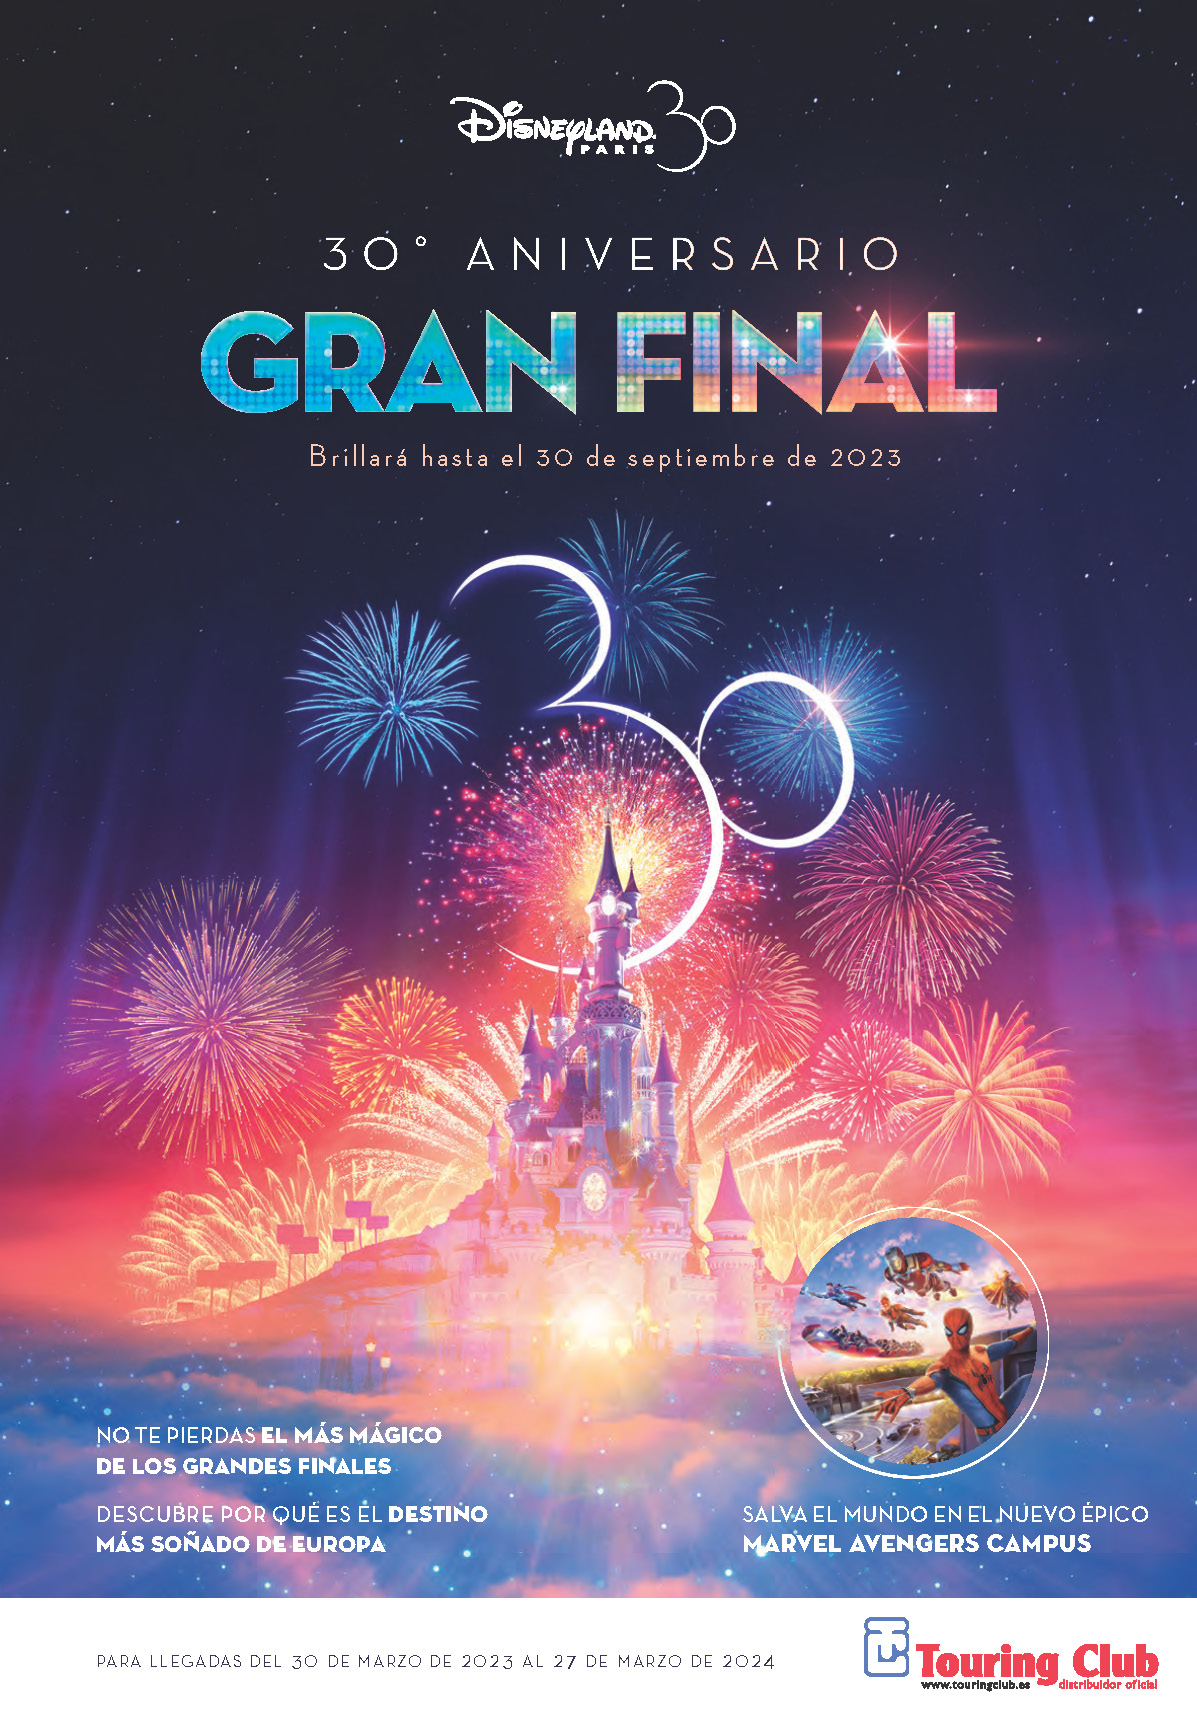 Catalogo Touring Club Disneyland Paris Gran Final 30 Aniversario 2023-2024 RED